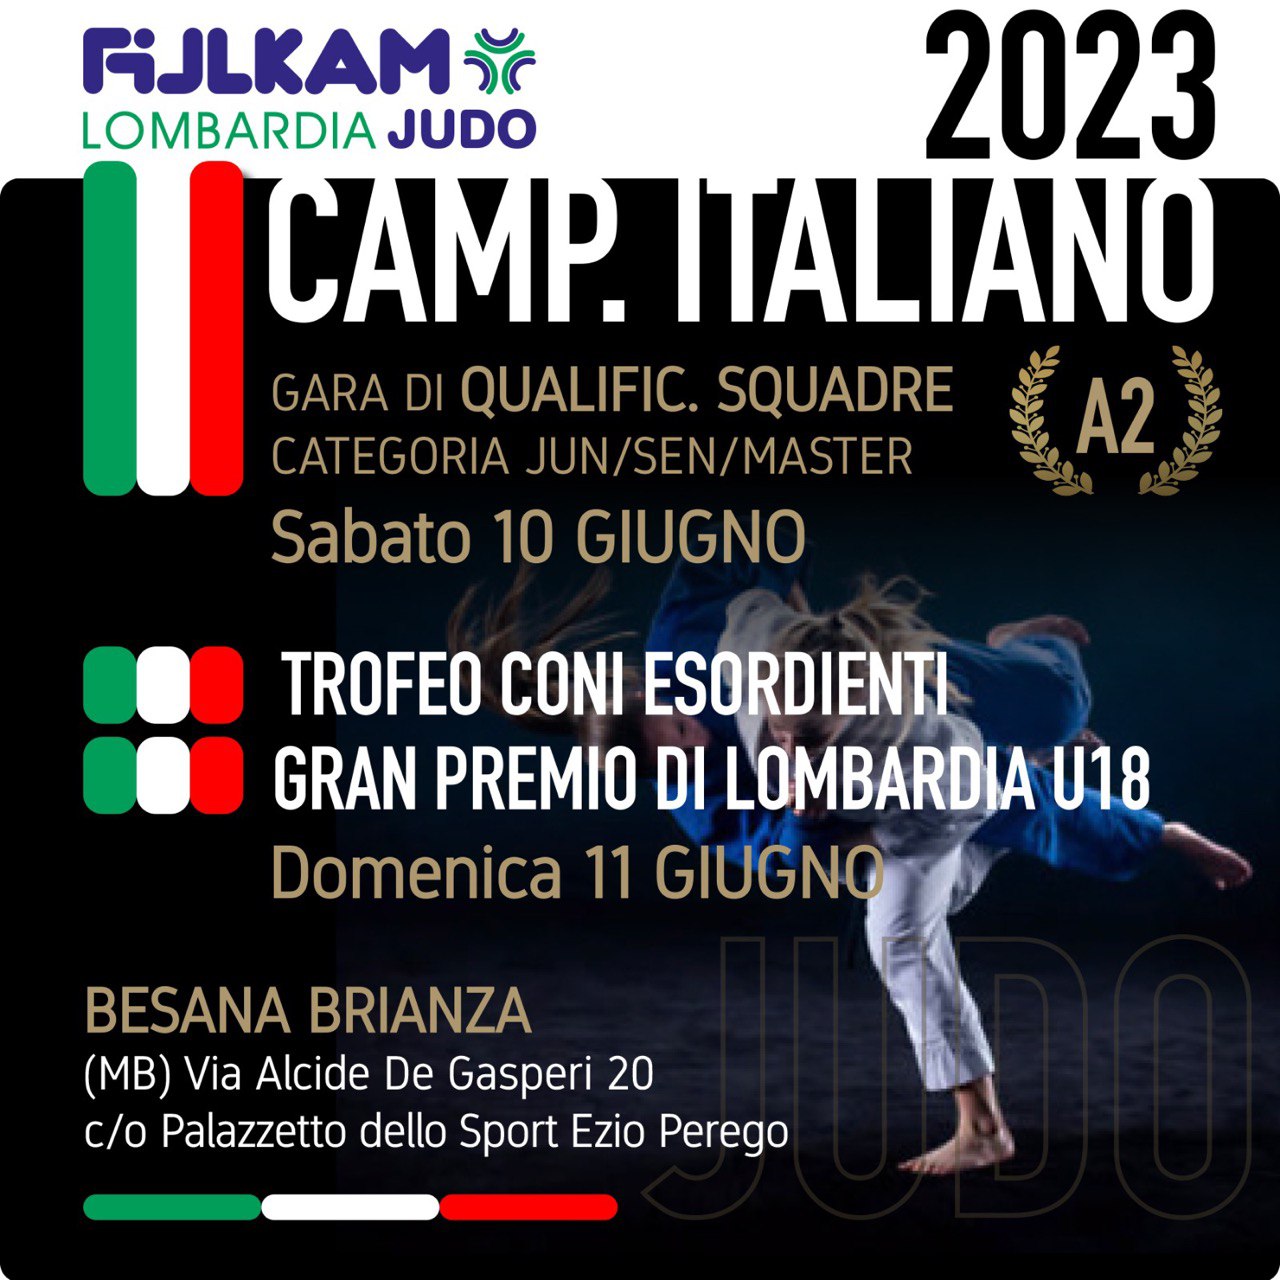 Campionato Italiano qualif. squadre - Trofeo Coni Esordienti 